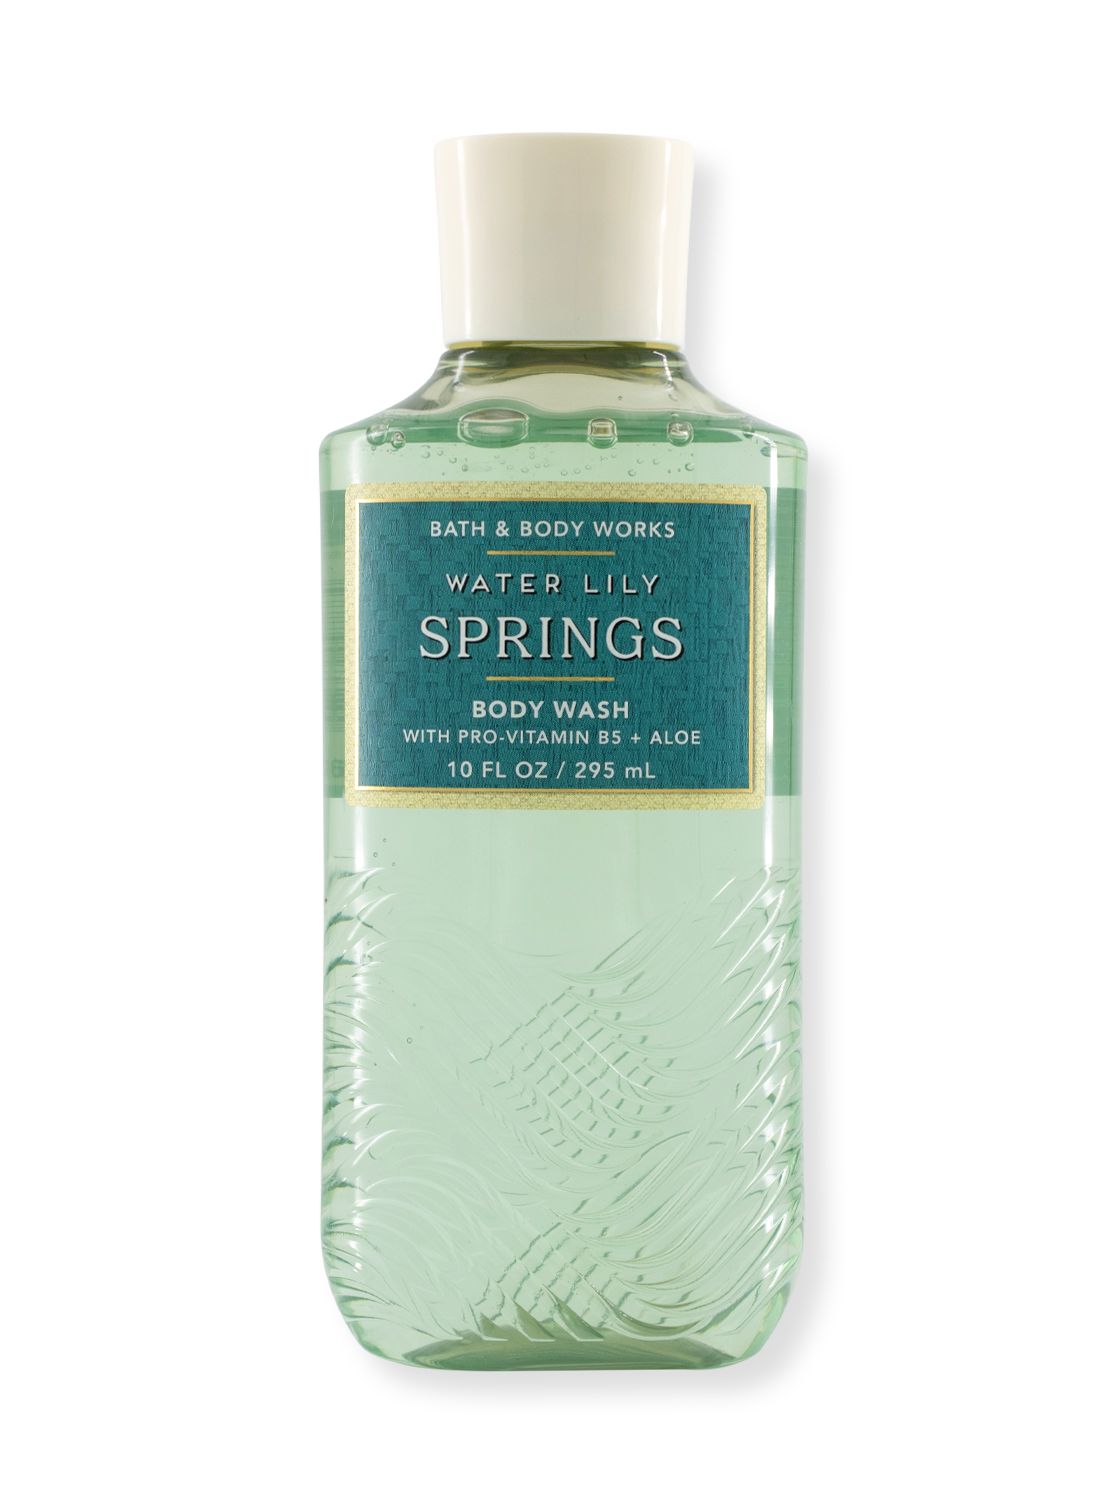 Gel de douche / lavage du corps - Water Lily Springs - 295 ml